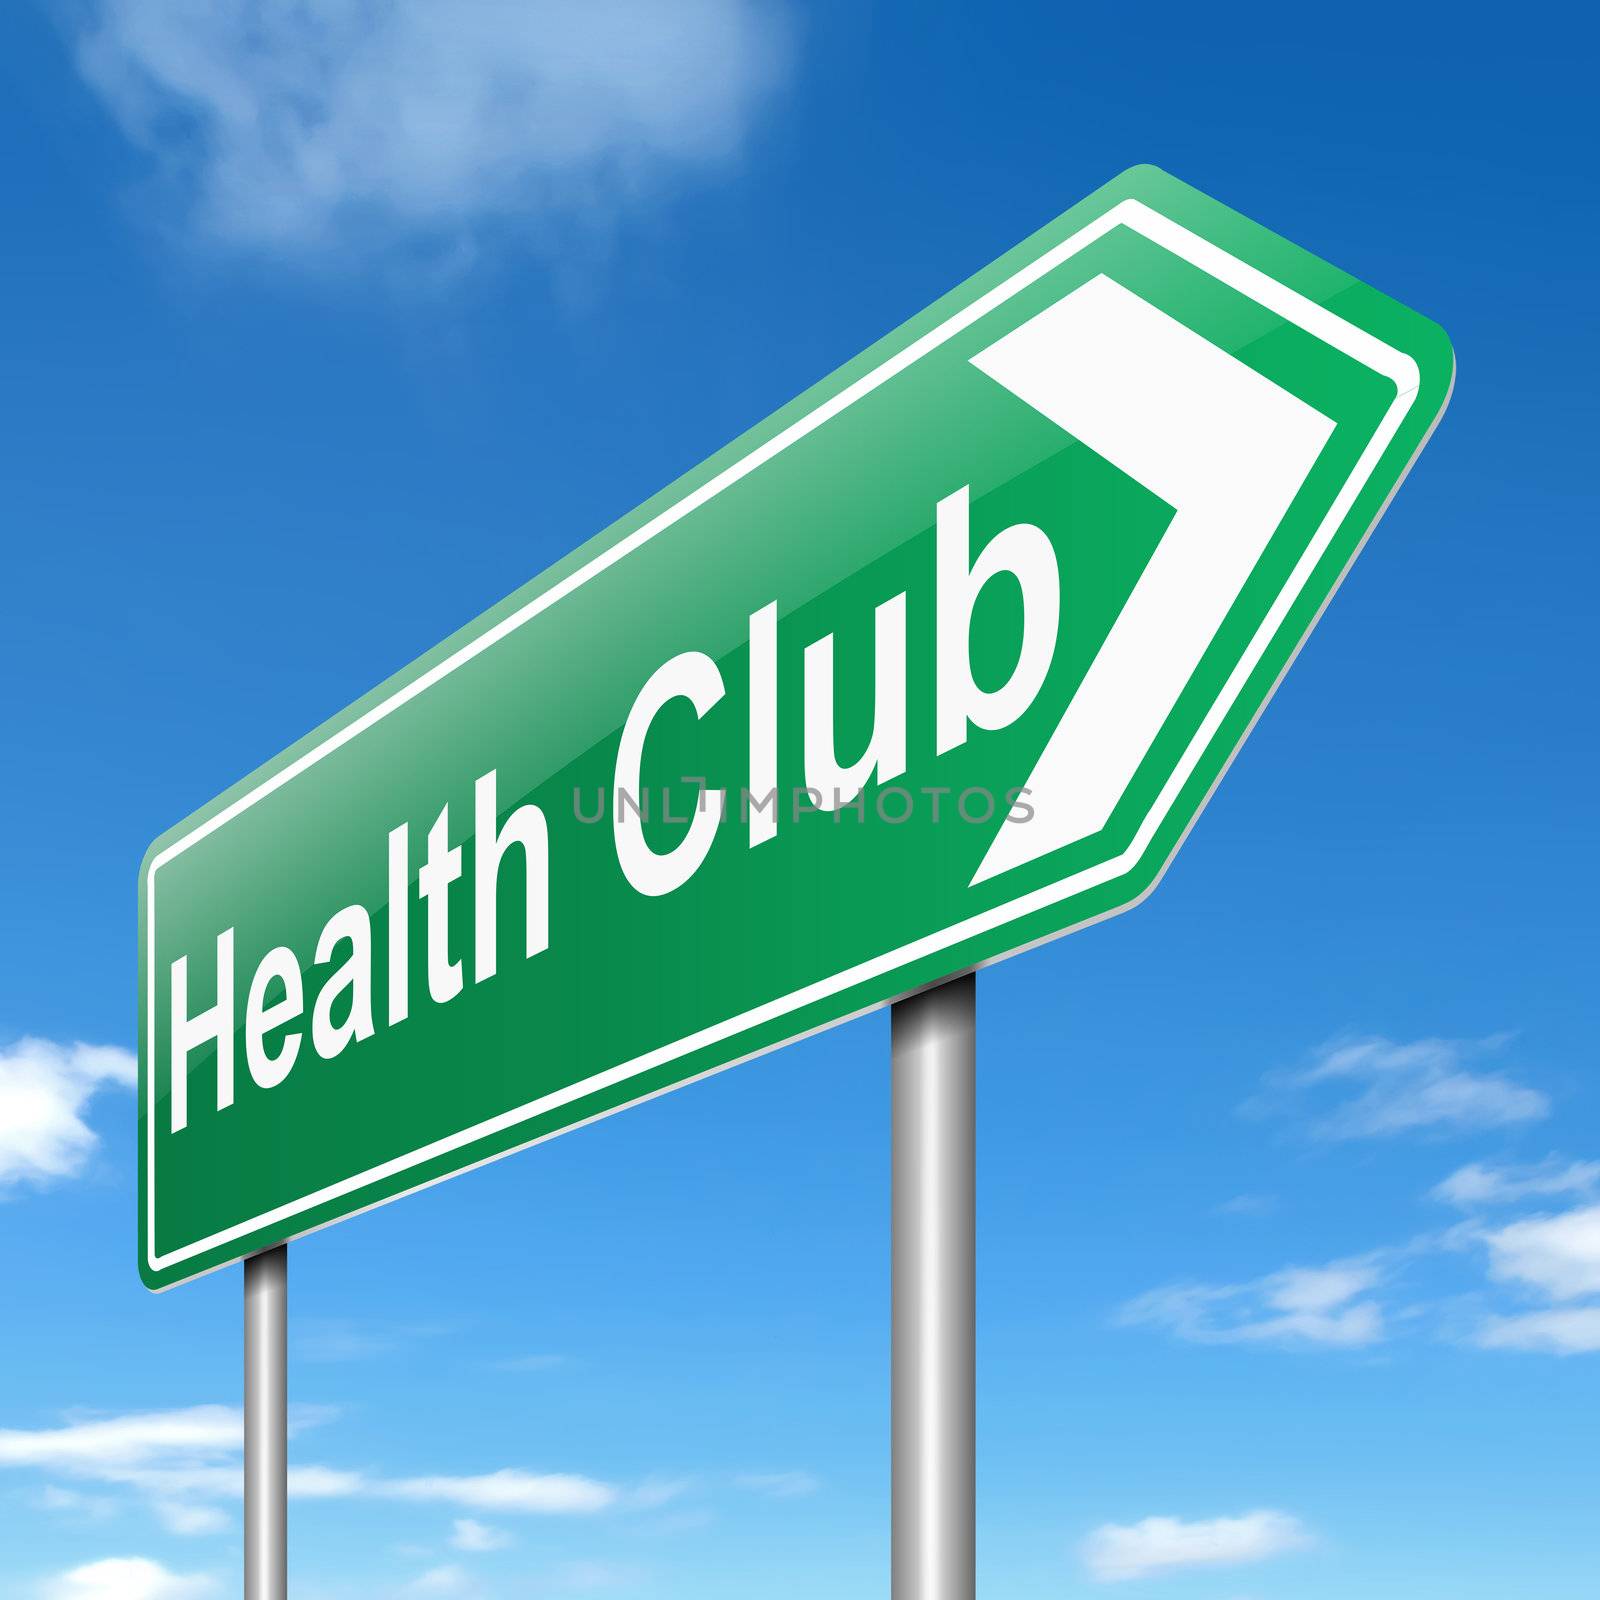 Health club sign. by 72soul